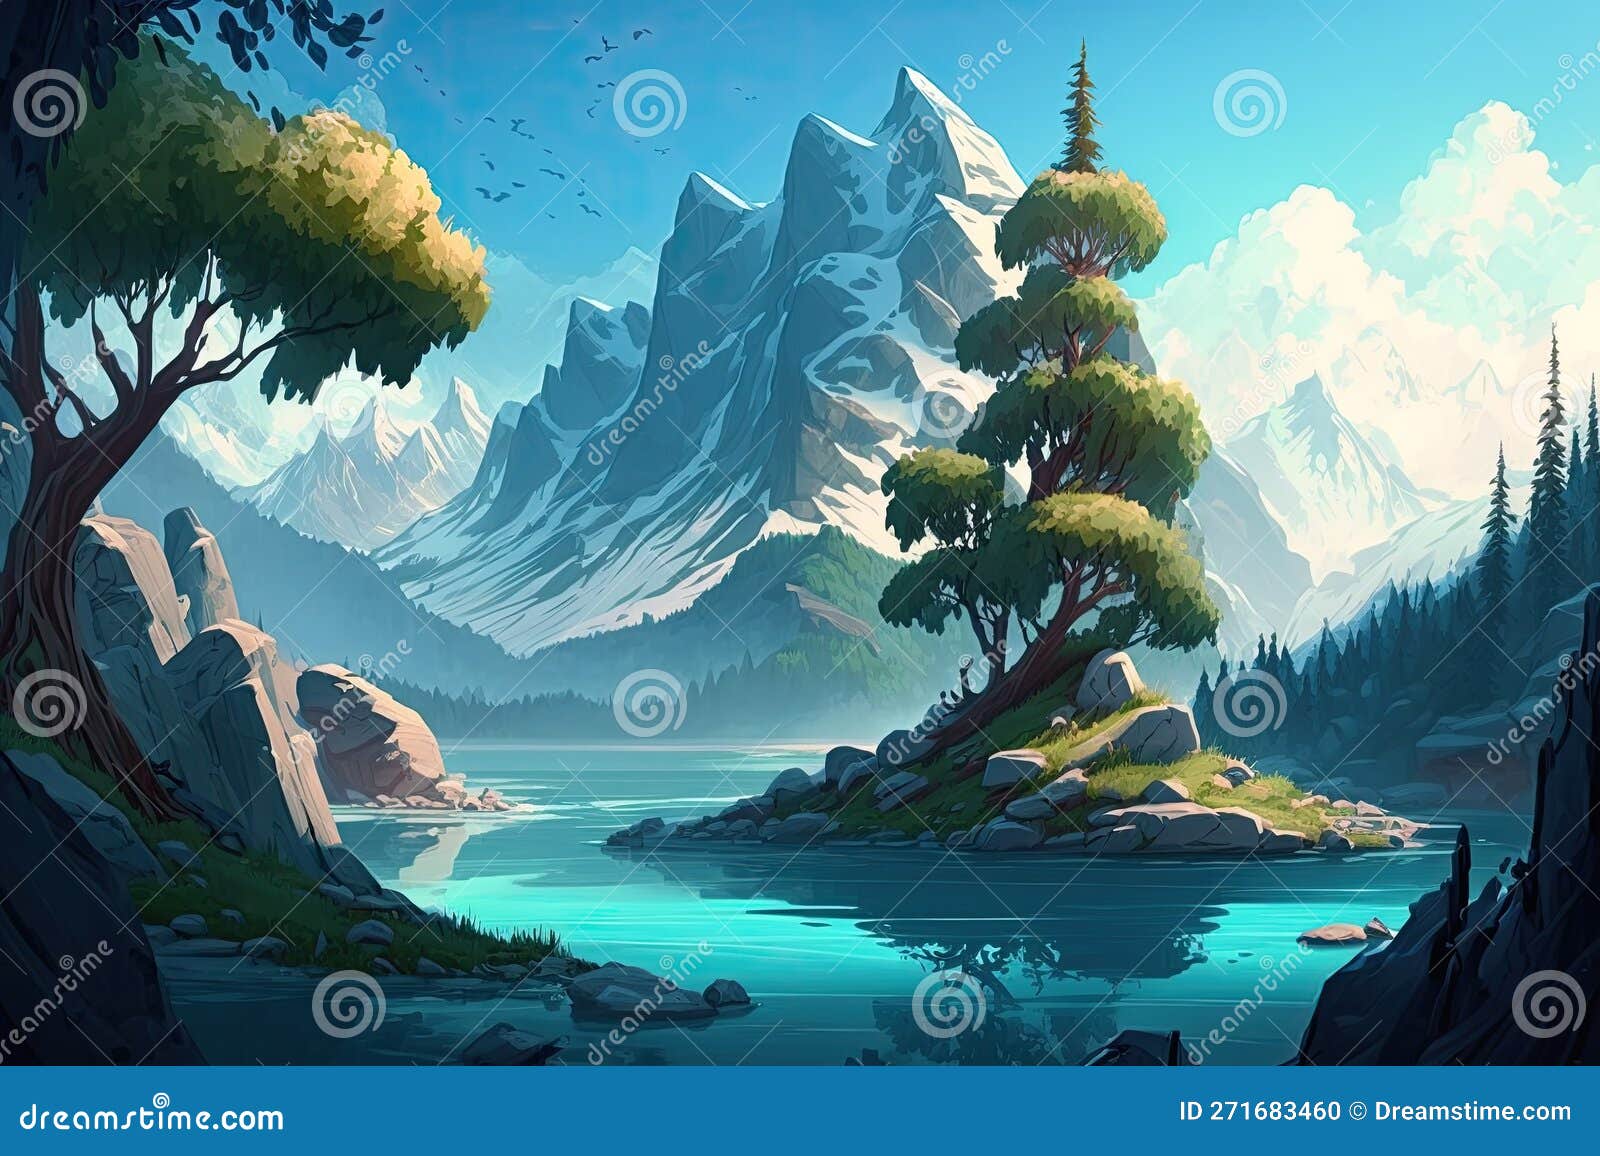 Majestic Mountain 2D Animation Illustration Fantasy Game Nature ...